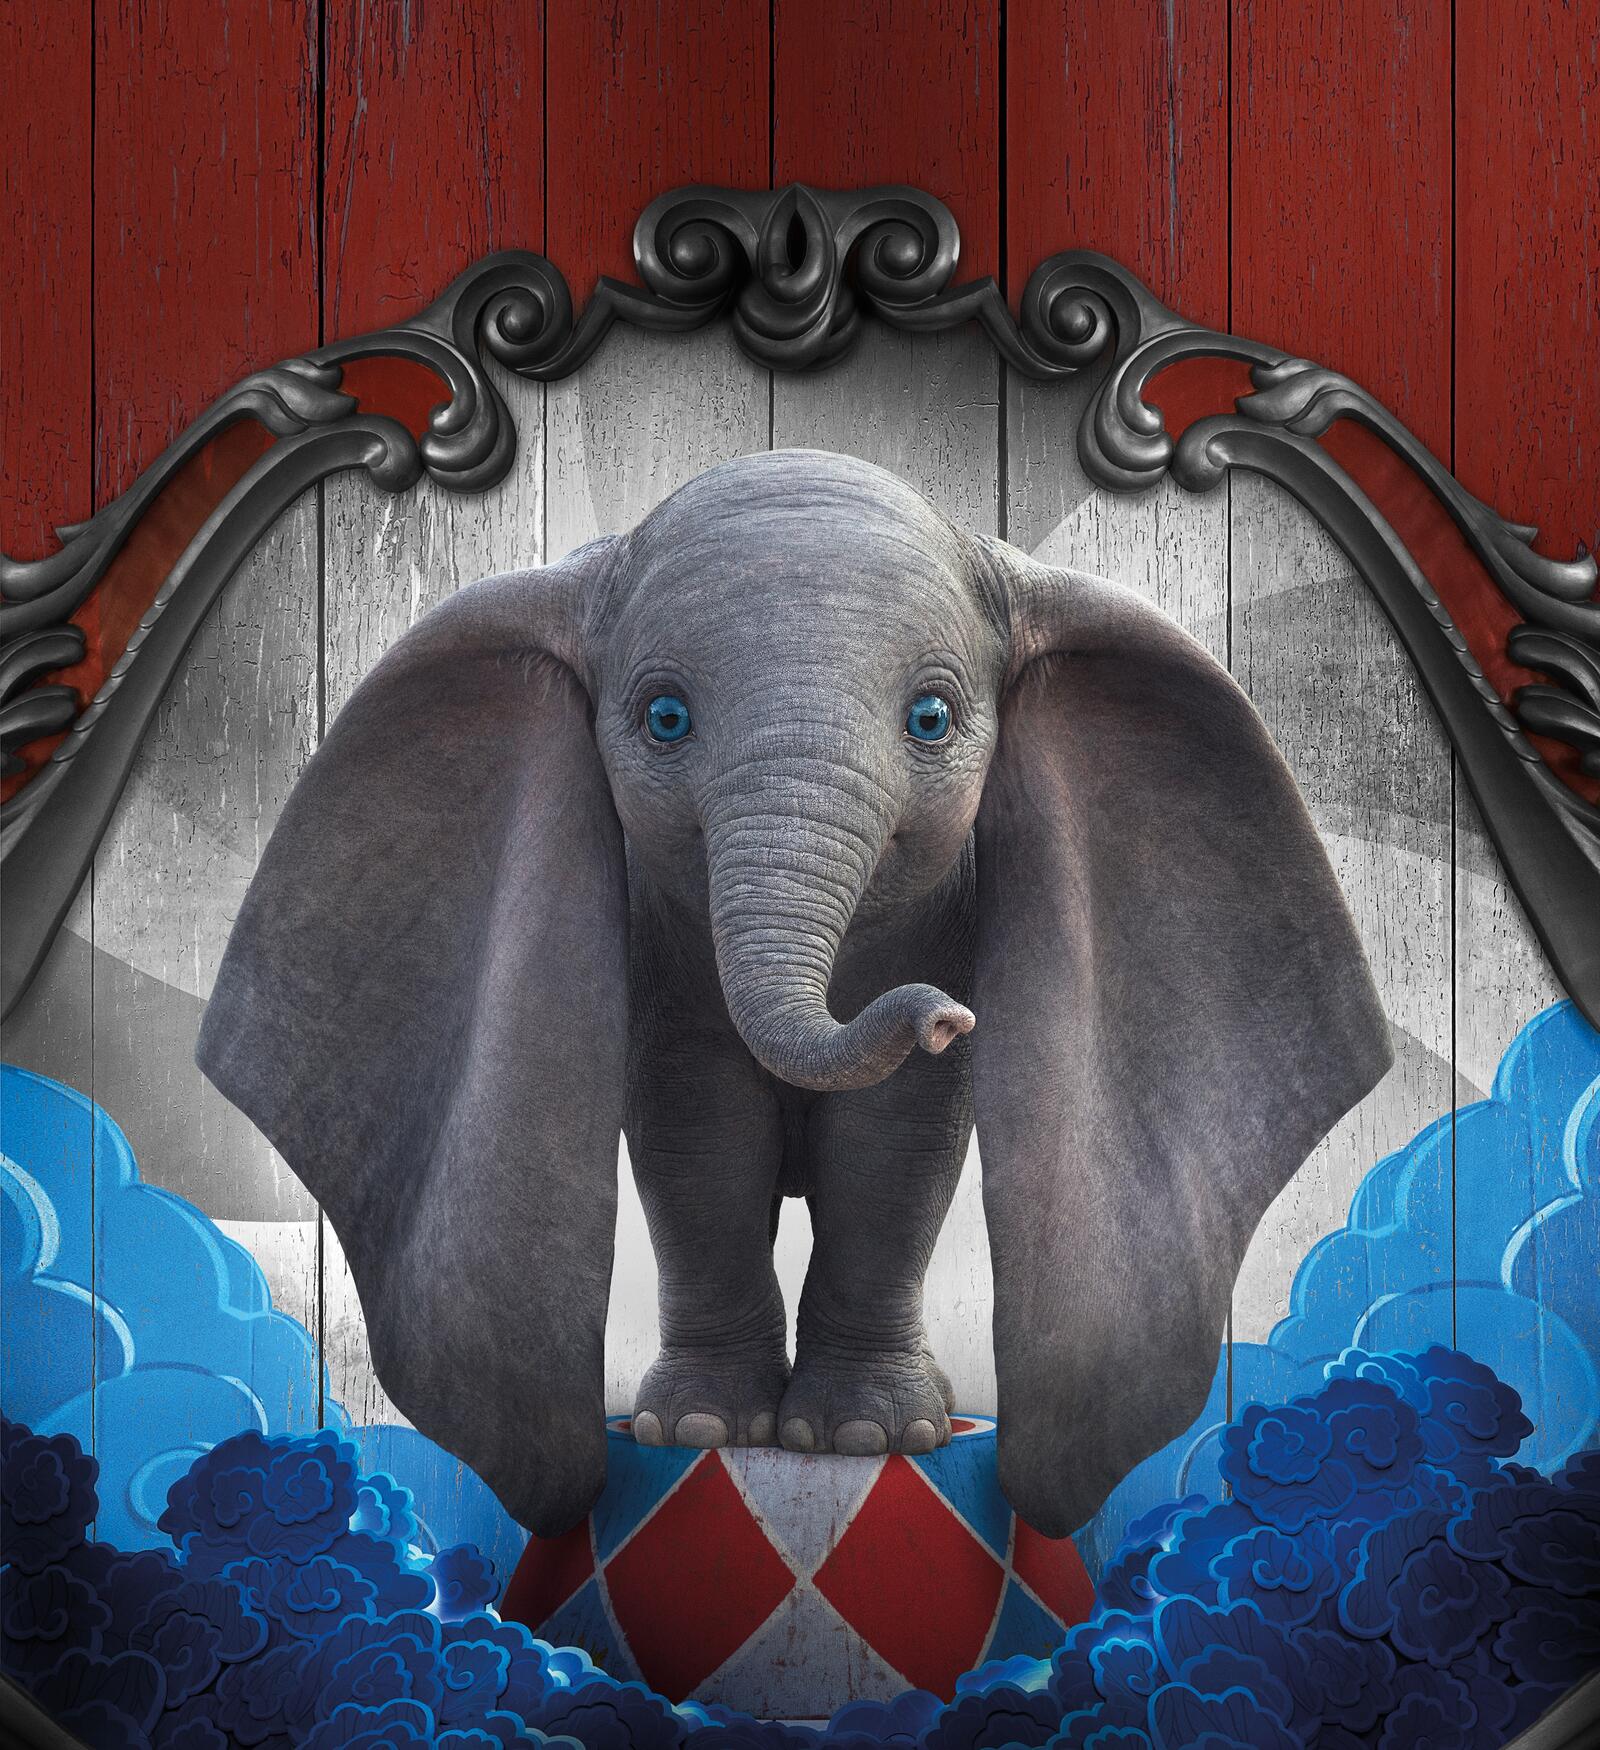 Wallpapers elephant dumbo 2019 nicely on the desktop